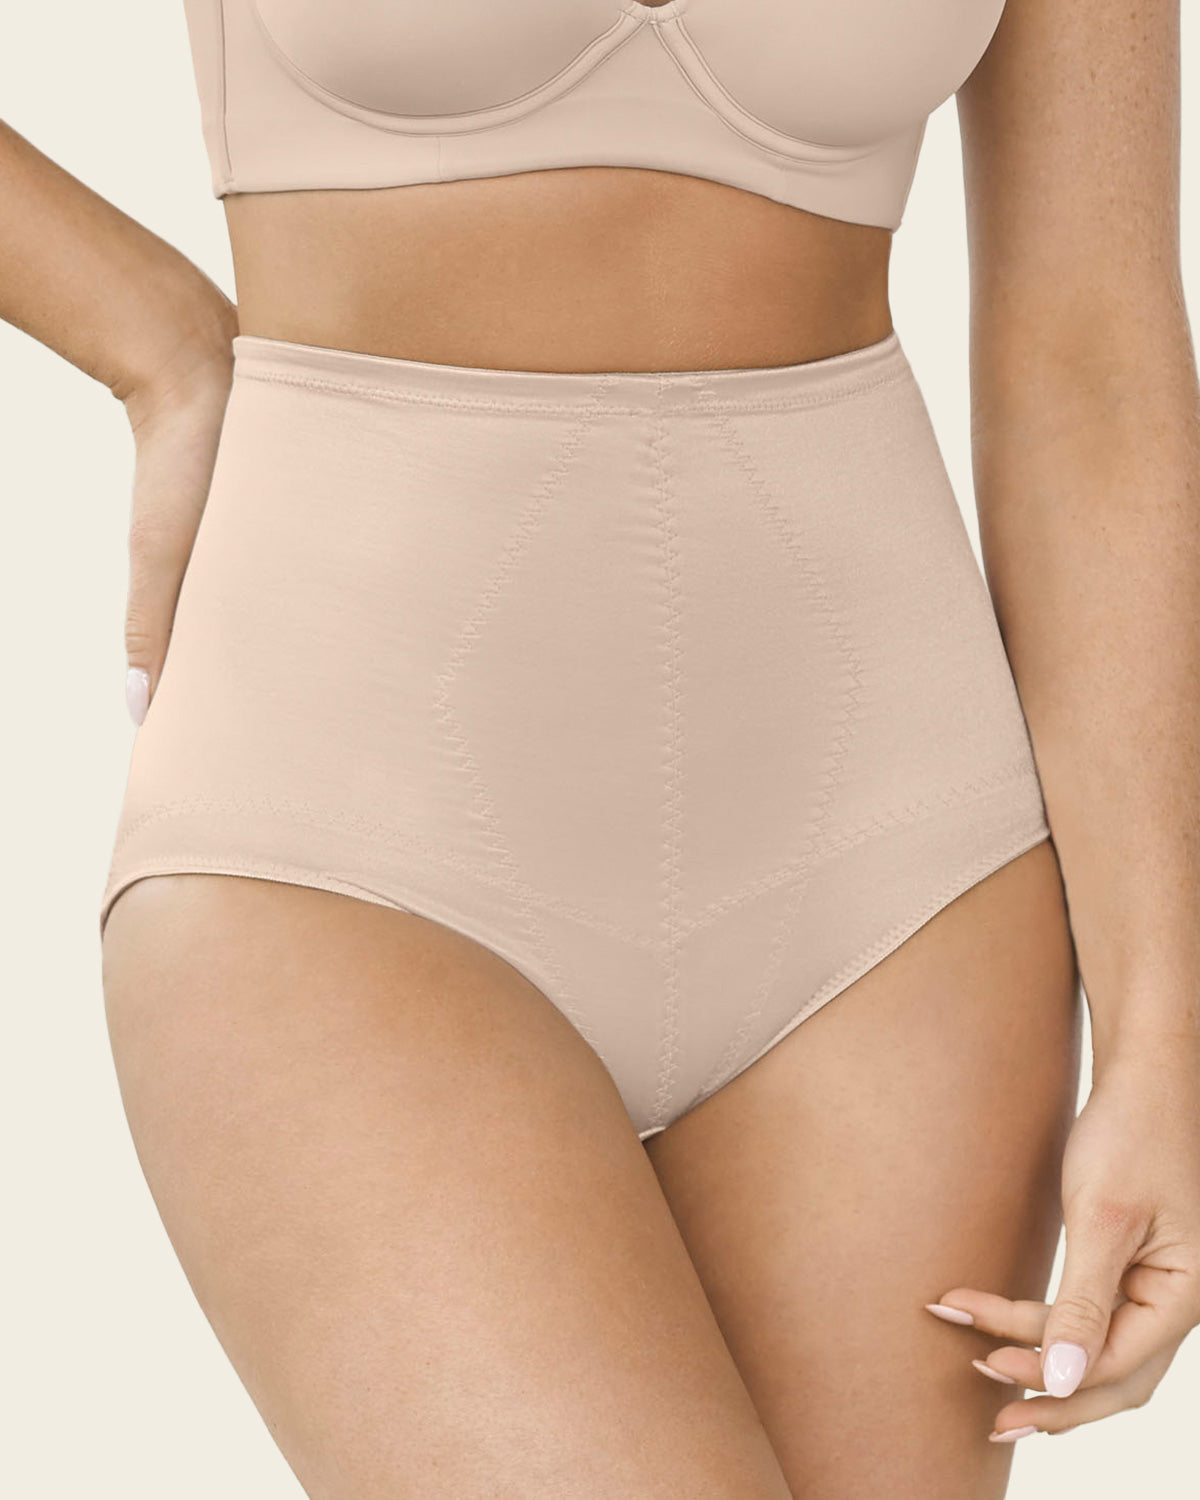 Leonisa Women's Slimming Braless Body Shaper in Classic Panty